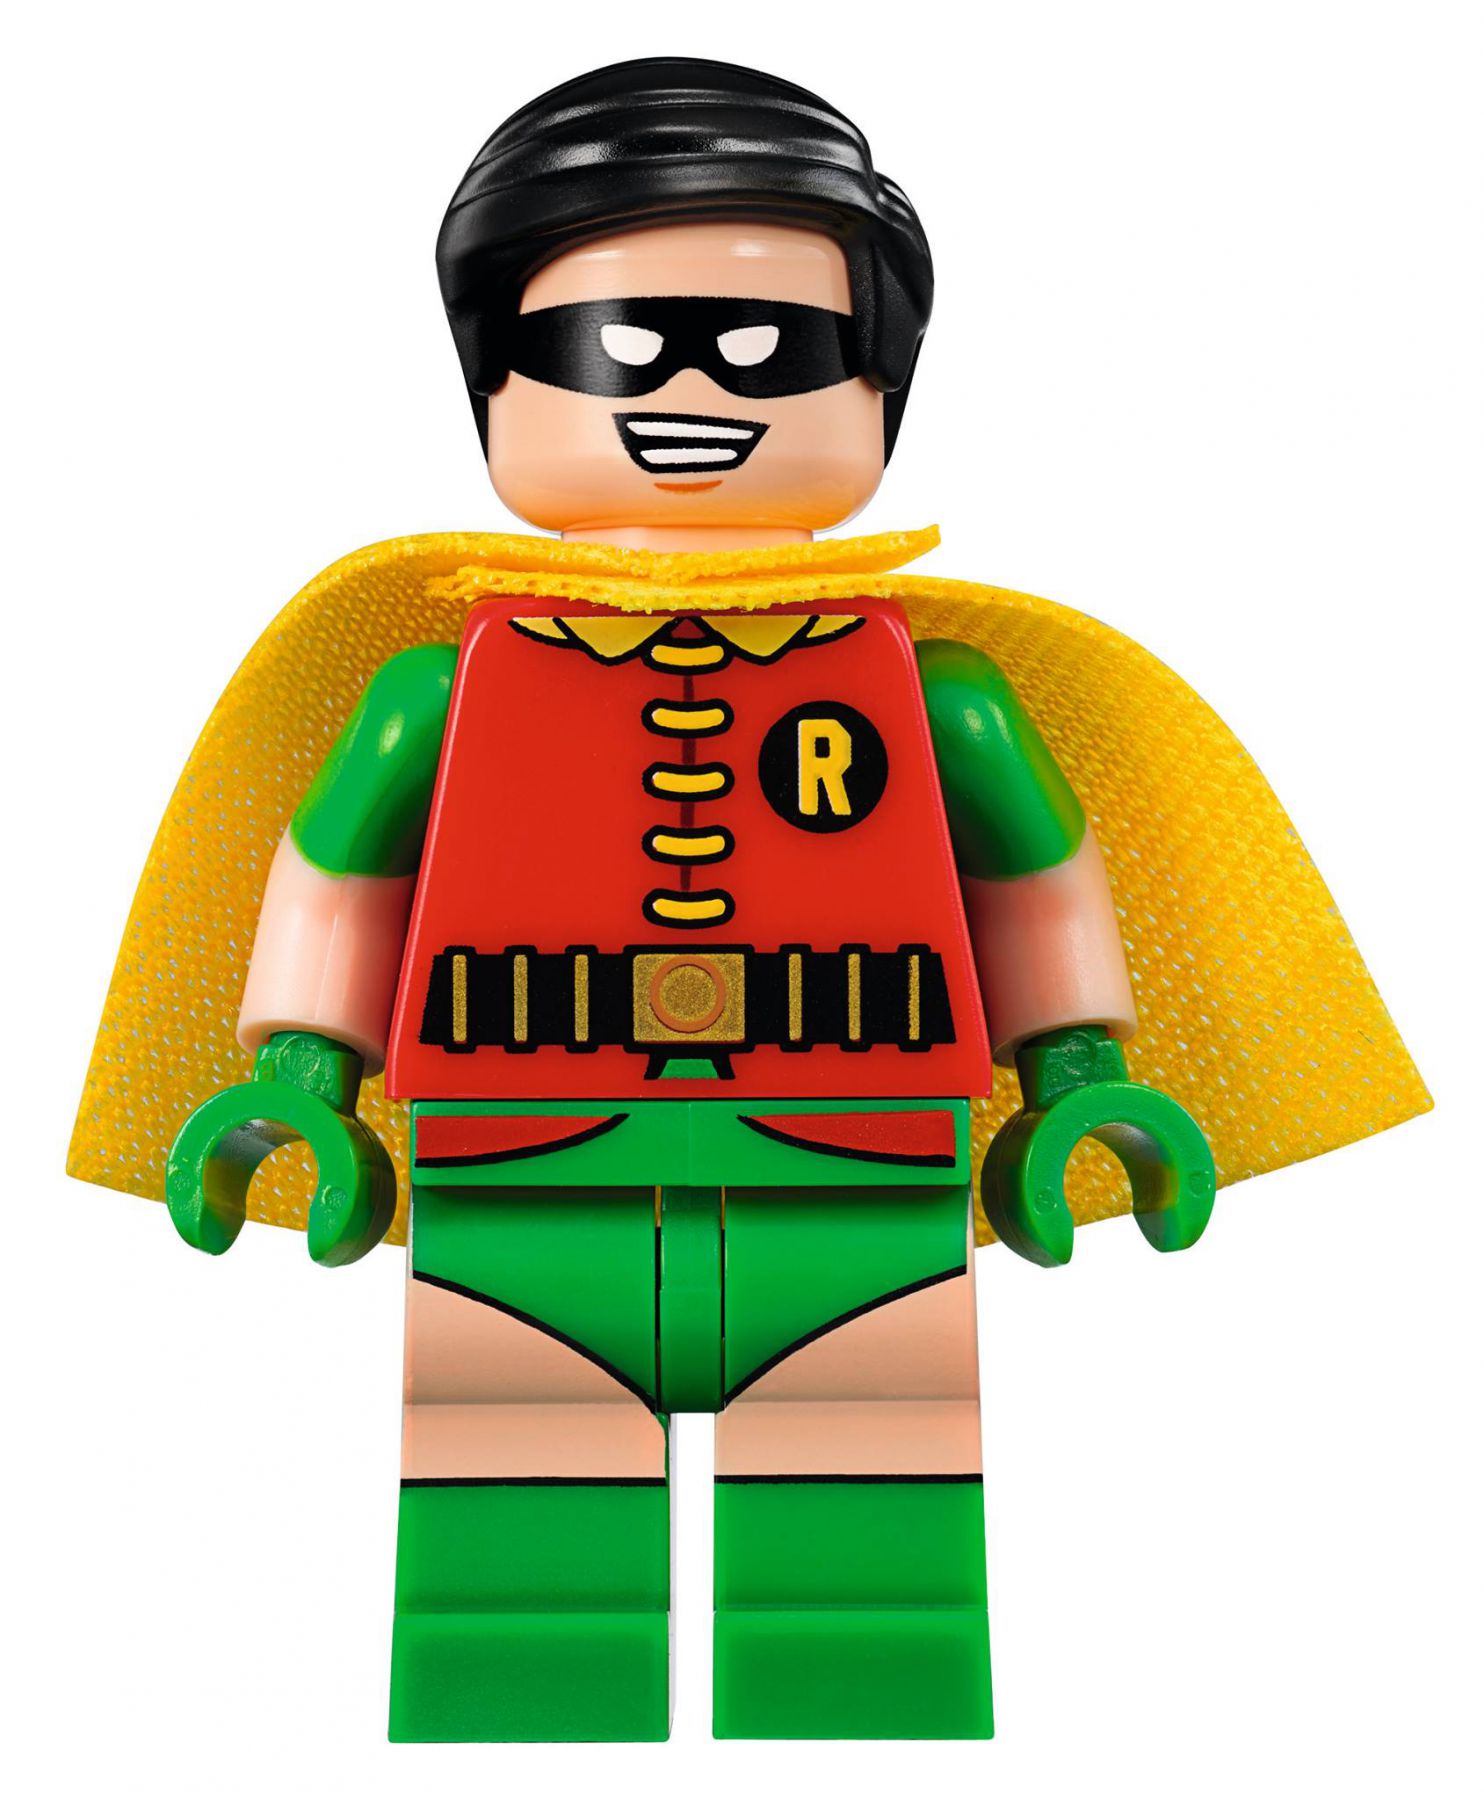 LEGO Super Heroes 76052 Batman™ (TV-Klassiker) – Bathöhle LEGO_76052_Batcave_03.jpg